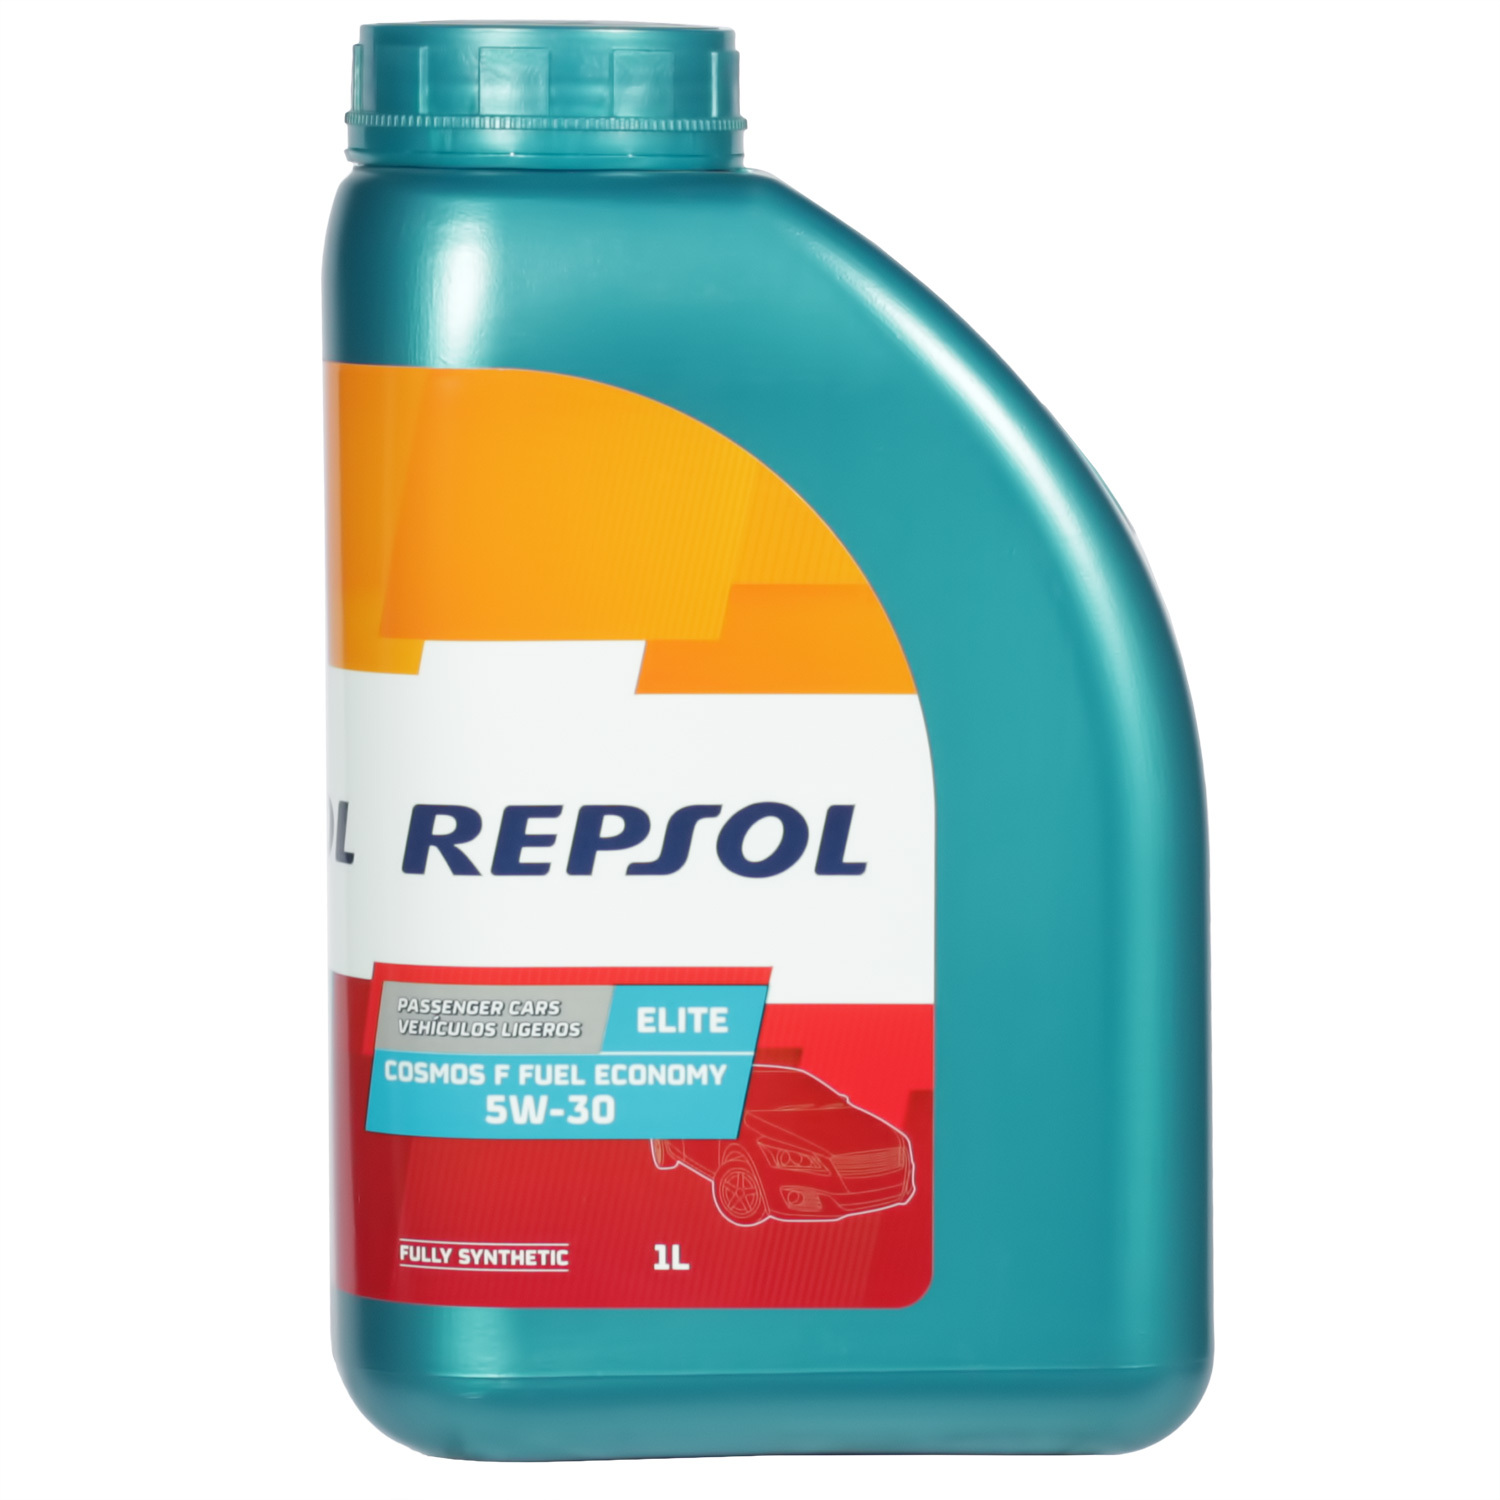 Repsol Моторное масло Repsol ELITE COSMOS F FUEL ECONOMY 5W-30, 1 л repsol моторное масло repsol elite evolution long life 5w 30 4 л